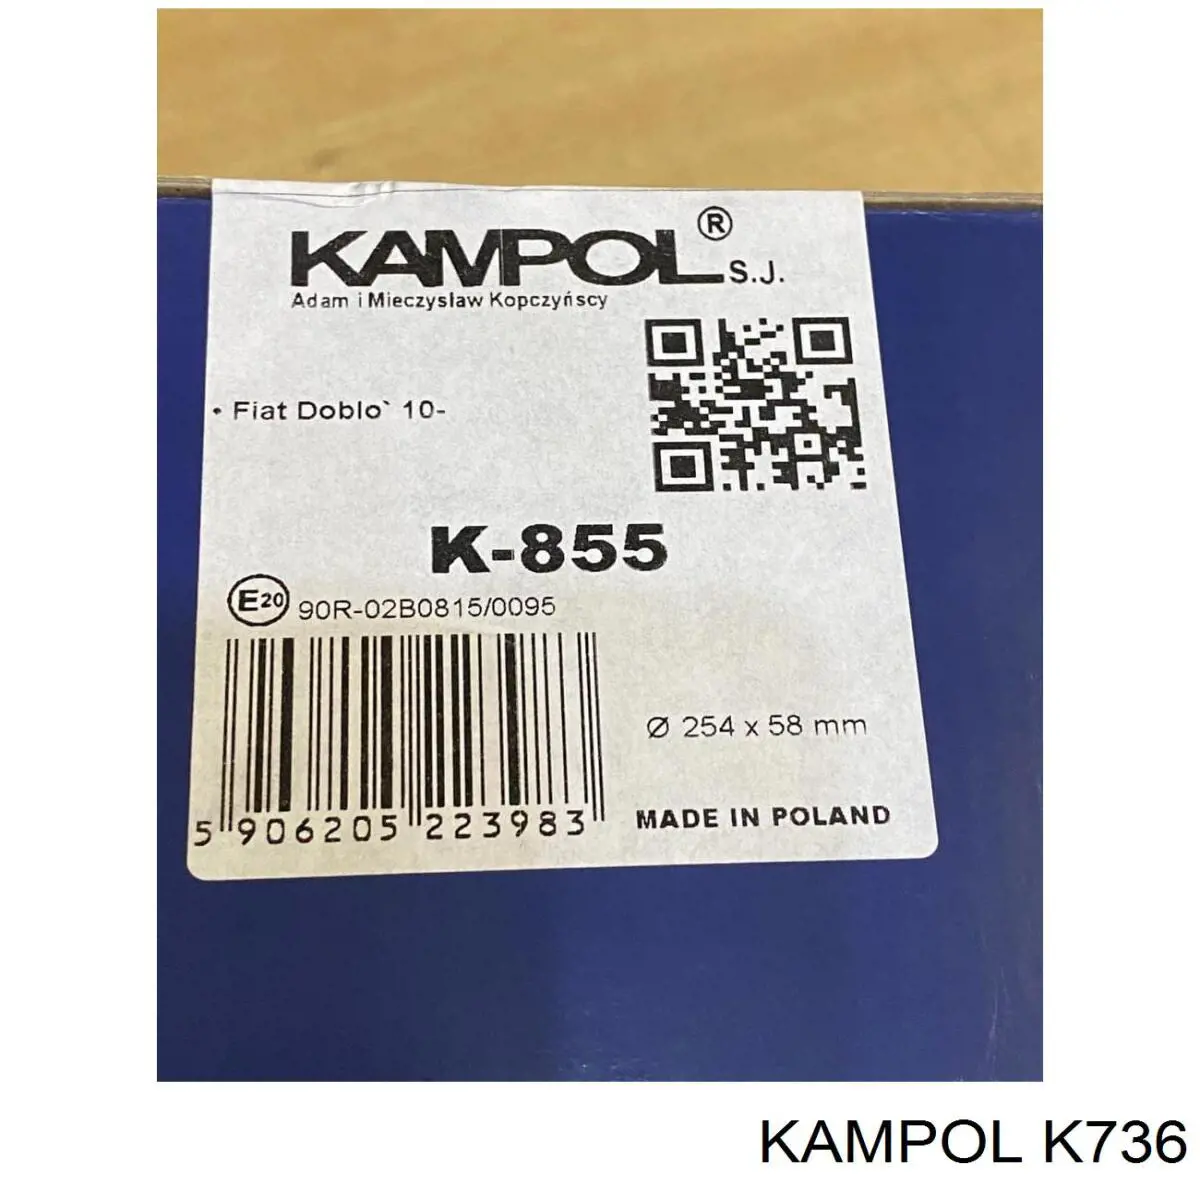 K-736 Kampol zapatas de freno de mano